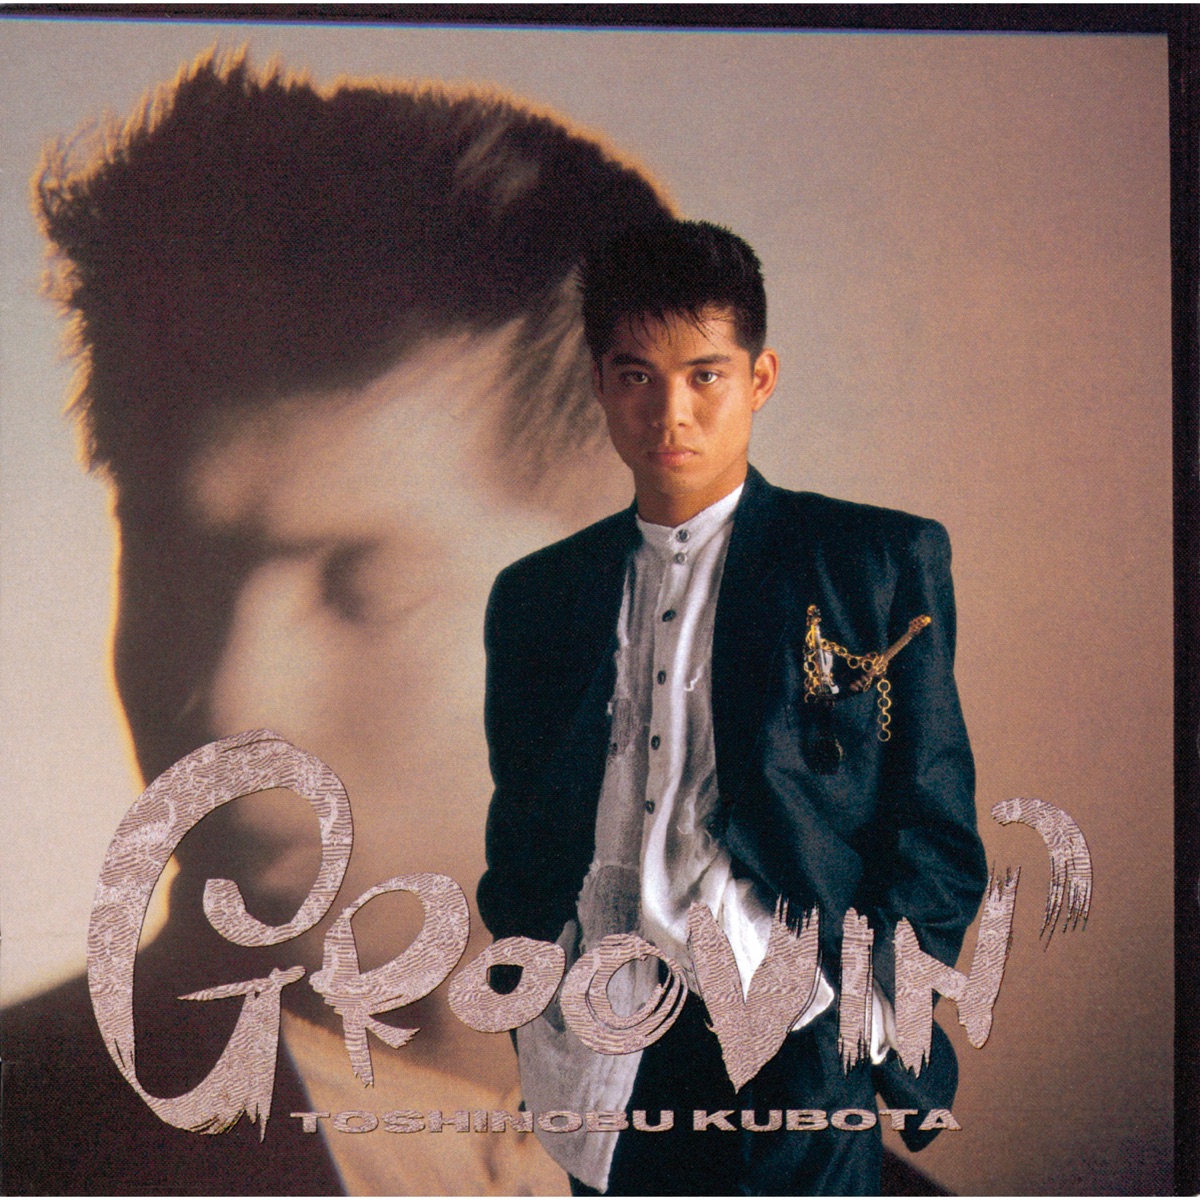 GROOVIN' - 久保田利伸のアルバム - Apple Music